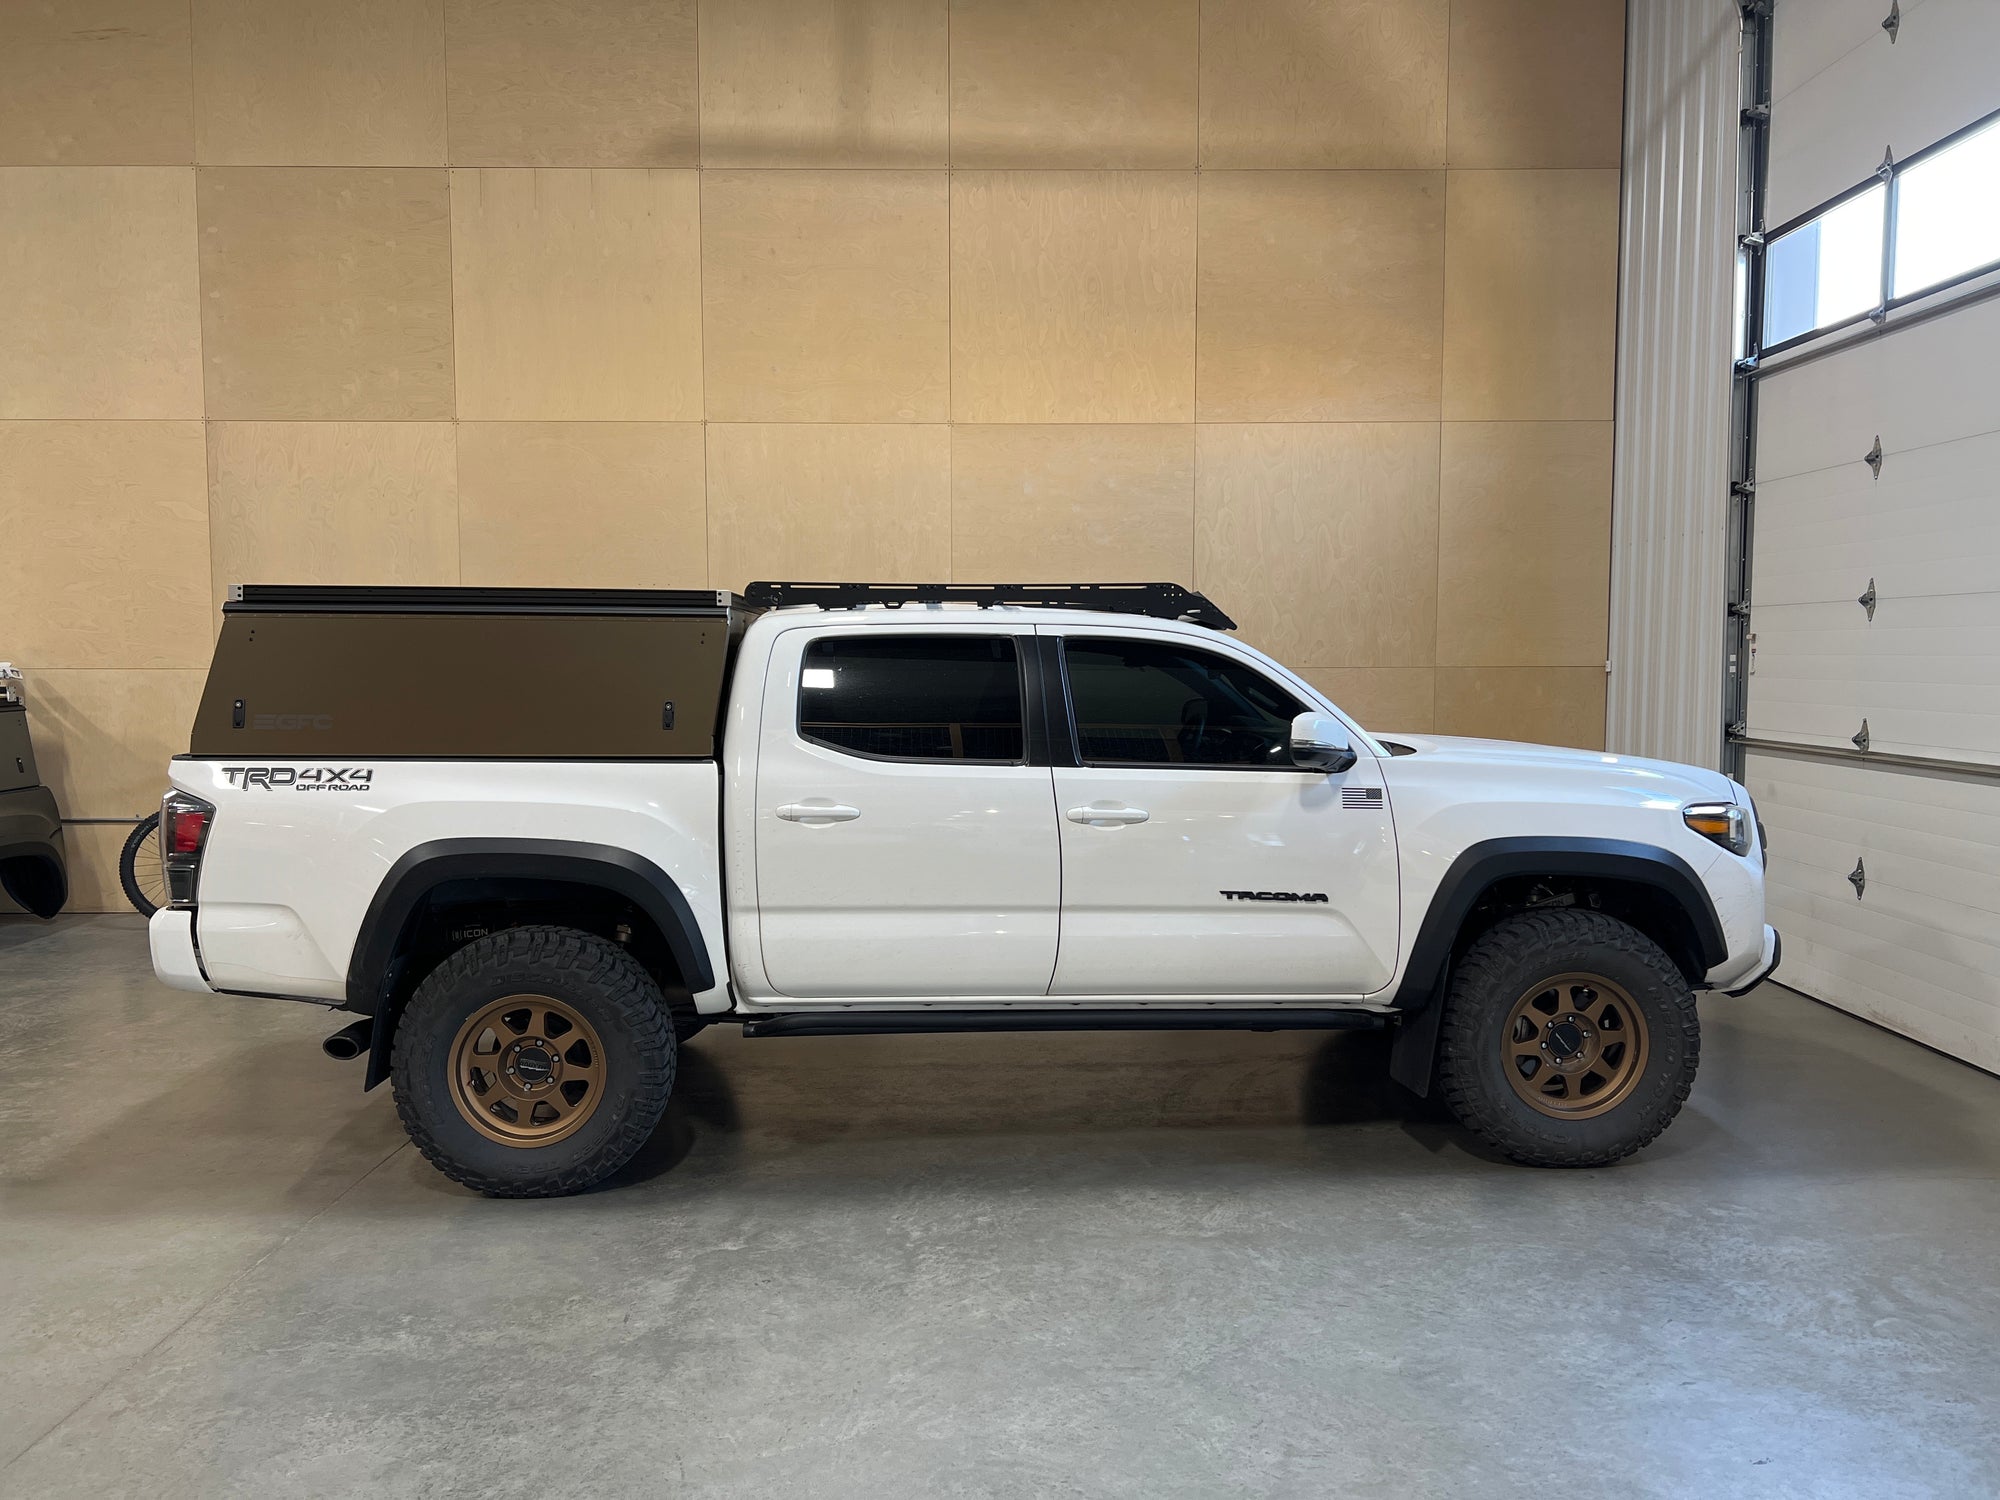 2021 Toyota Tacoma Topper - Build #315